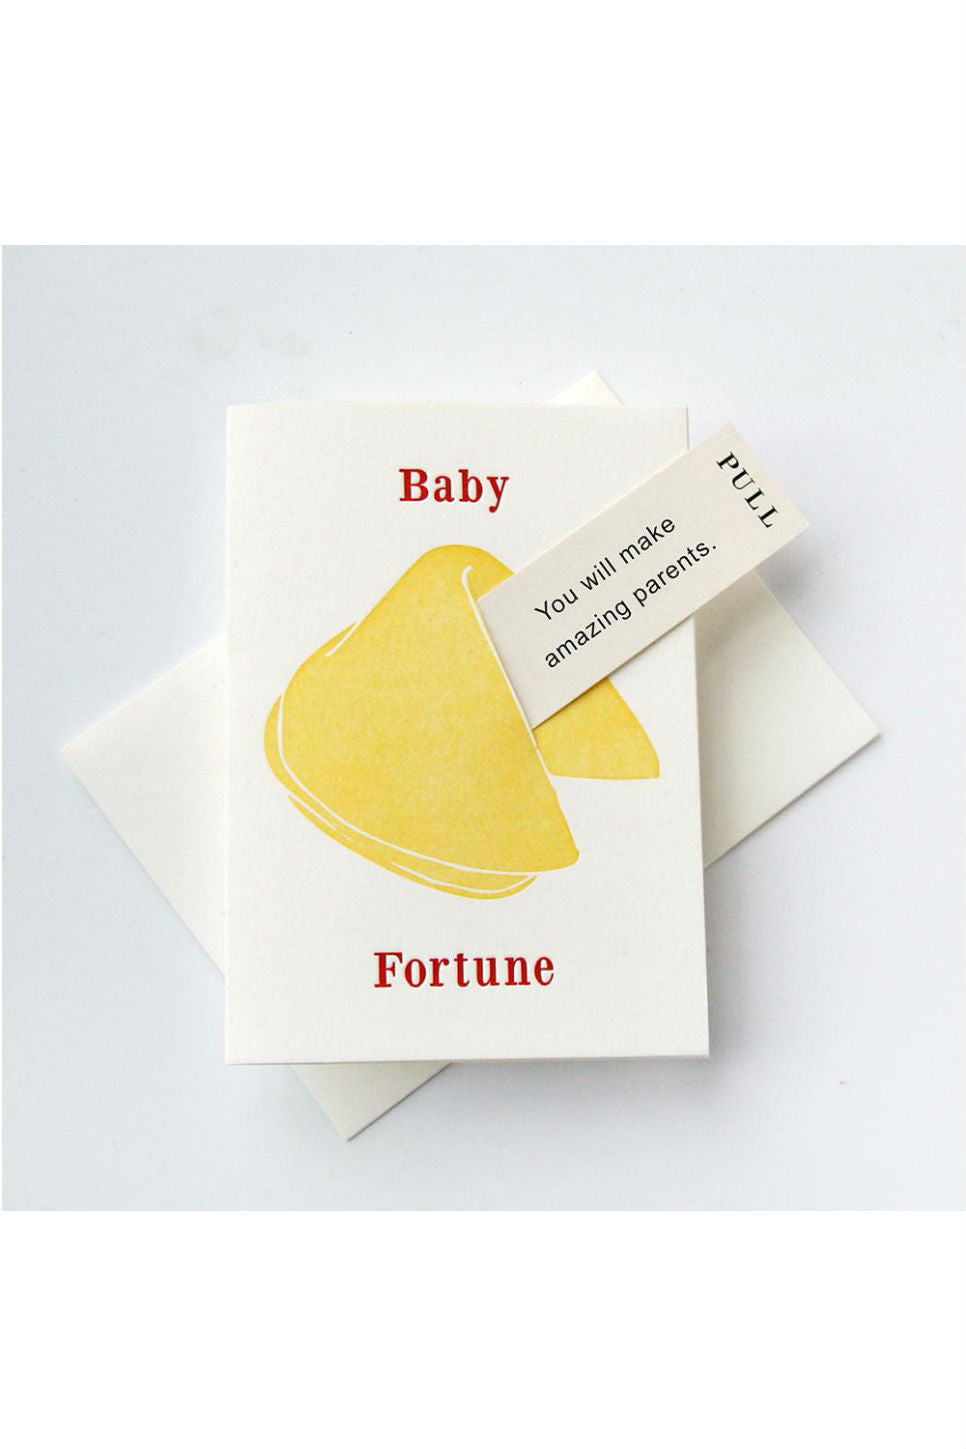 Steel Petal Press - Fortune Baby Amazing Parents Card - Inside